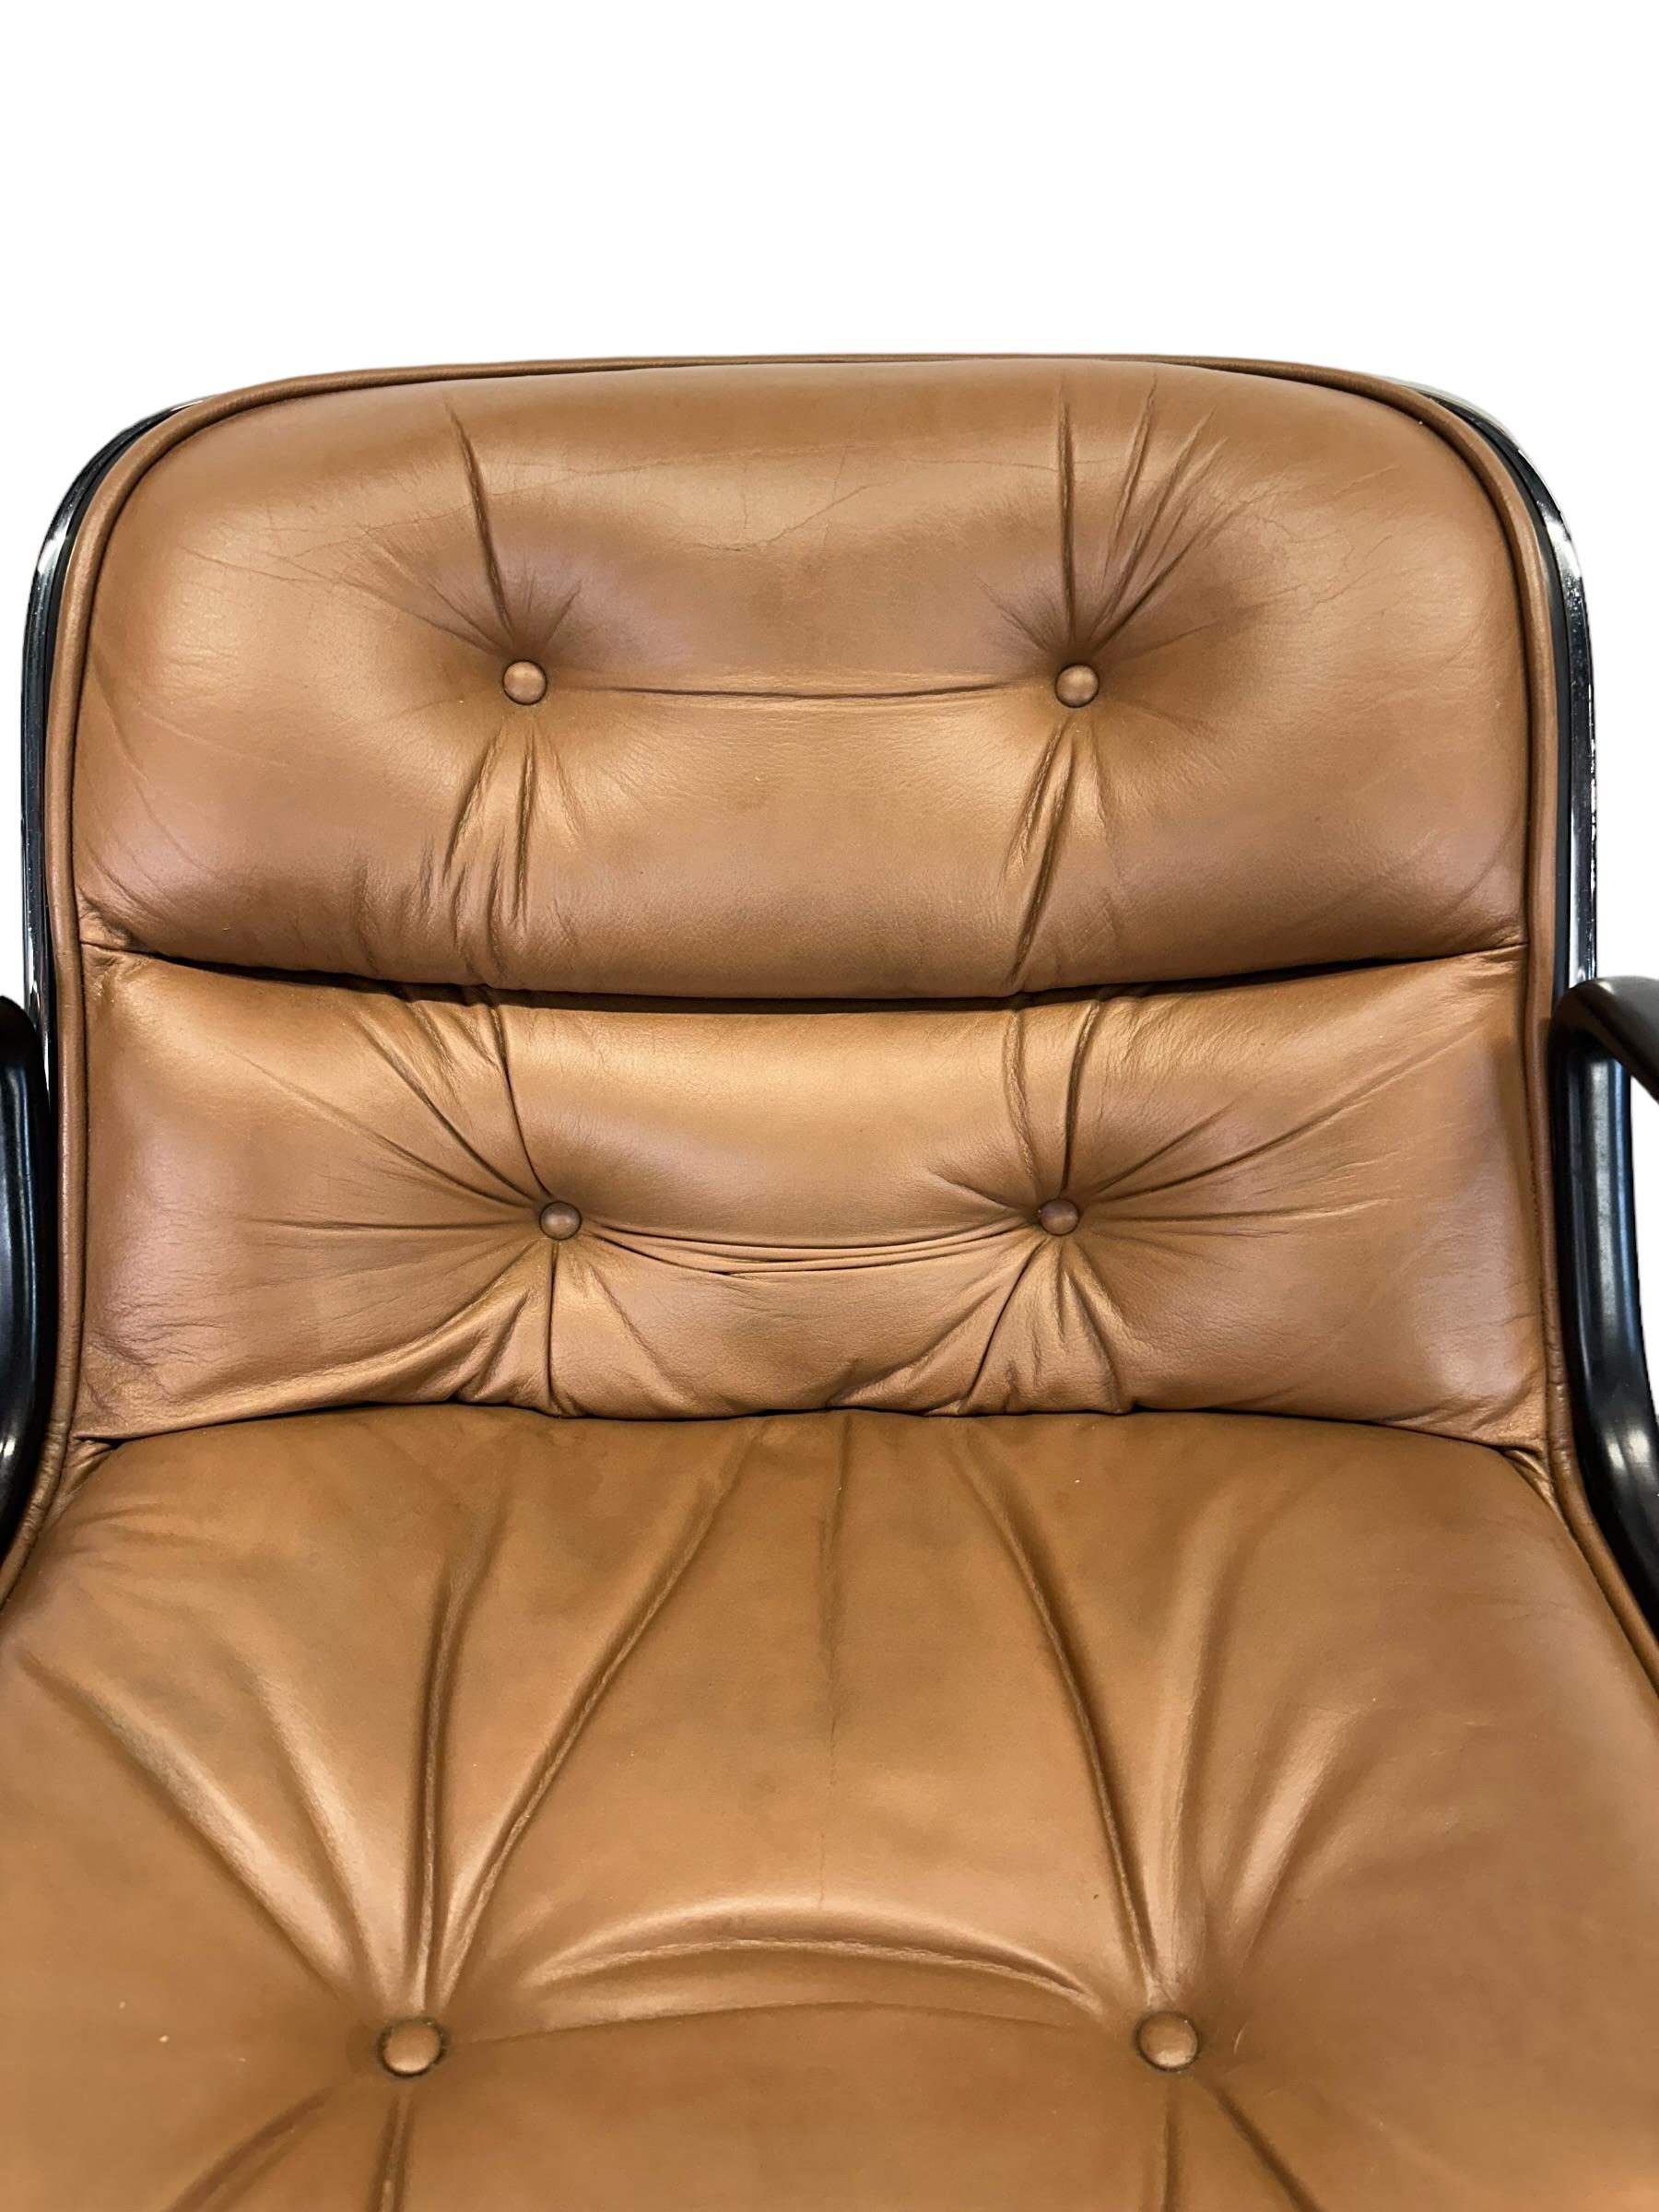 brown task chair